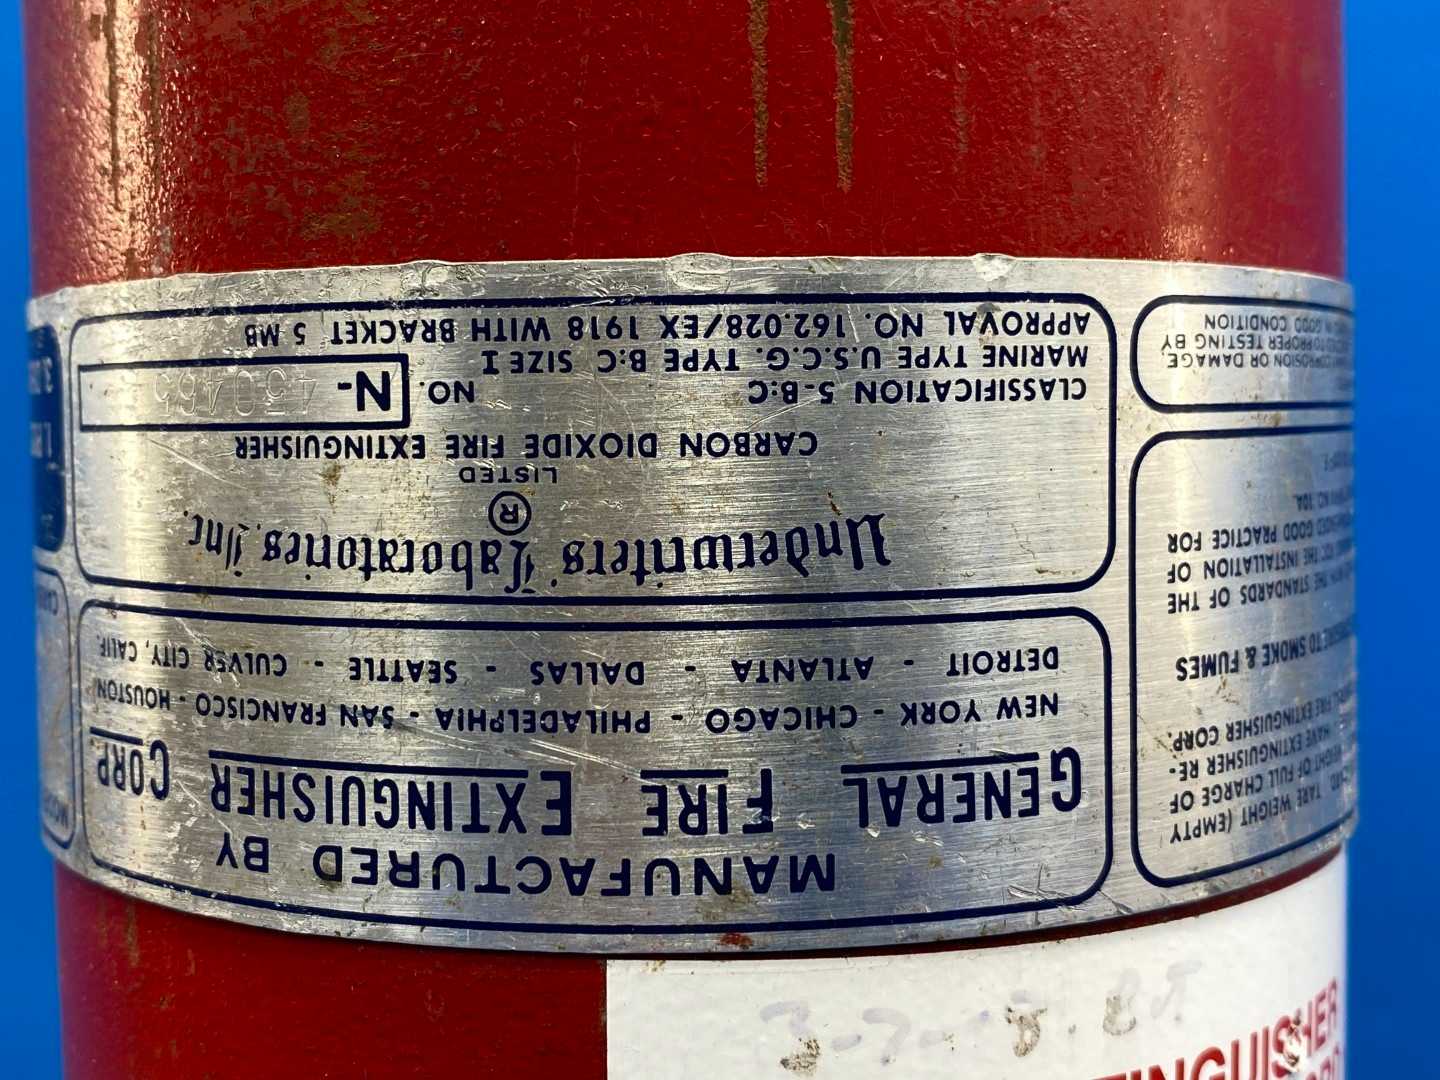 General 5R C 5LB Fire Extinguisher